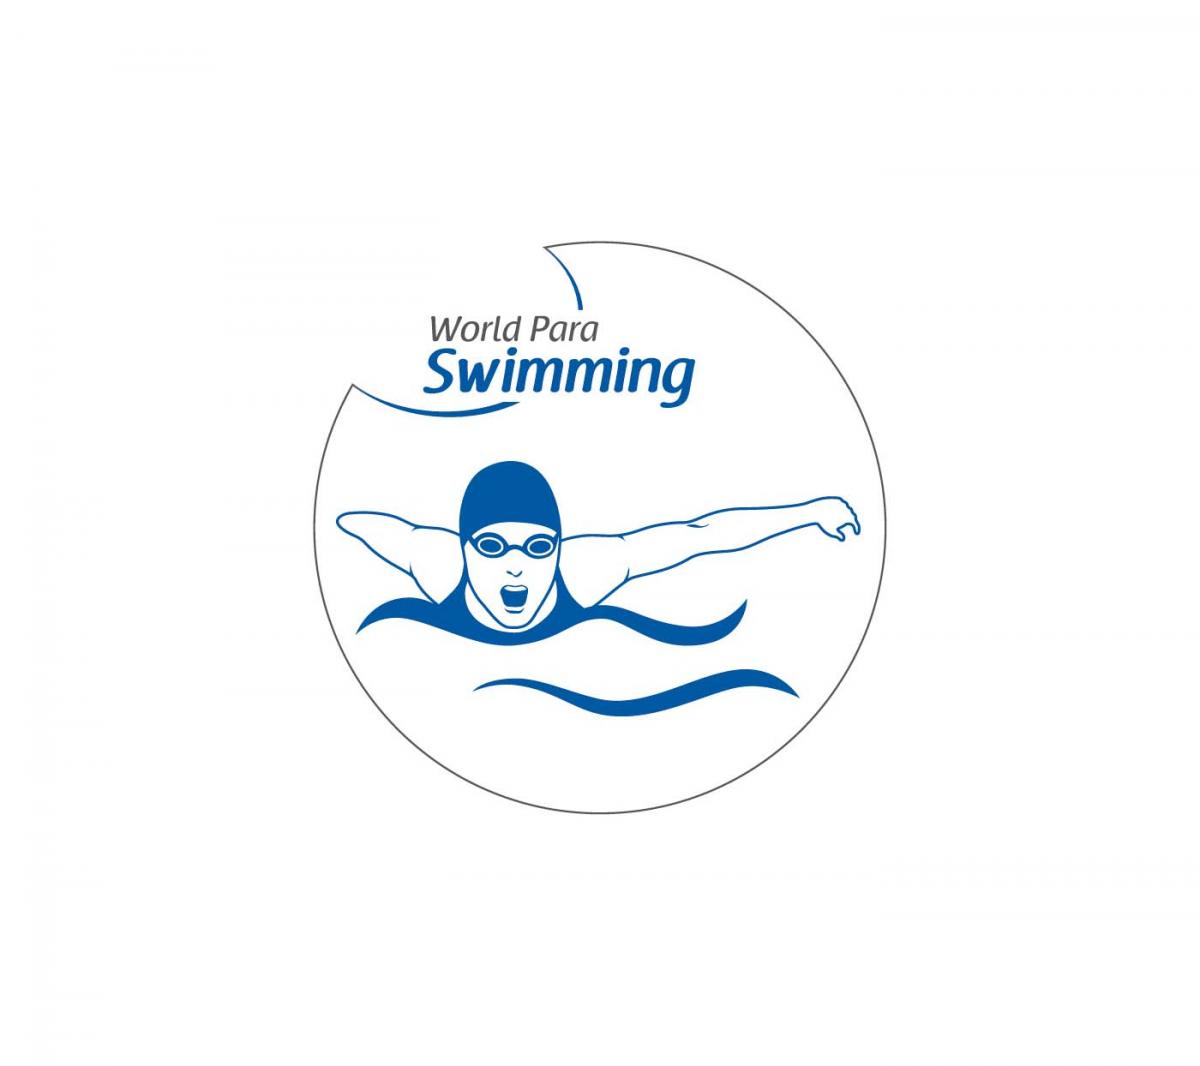 The logo of World Para Swimming